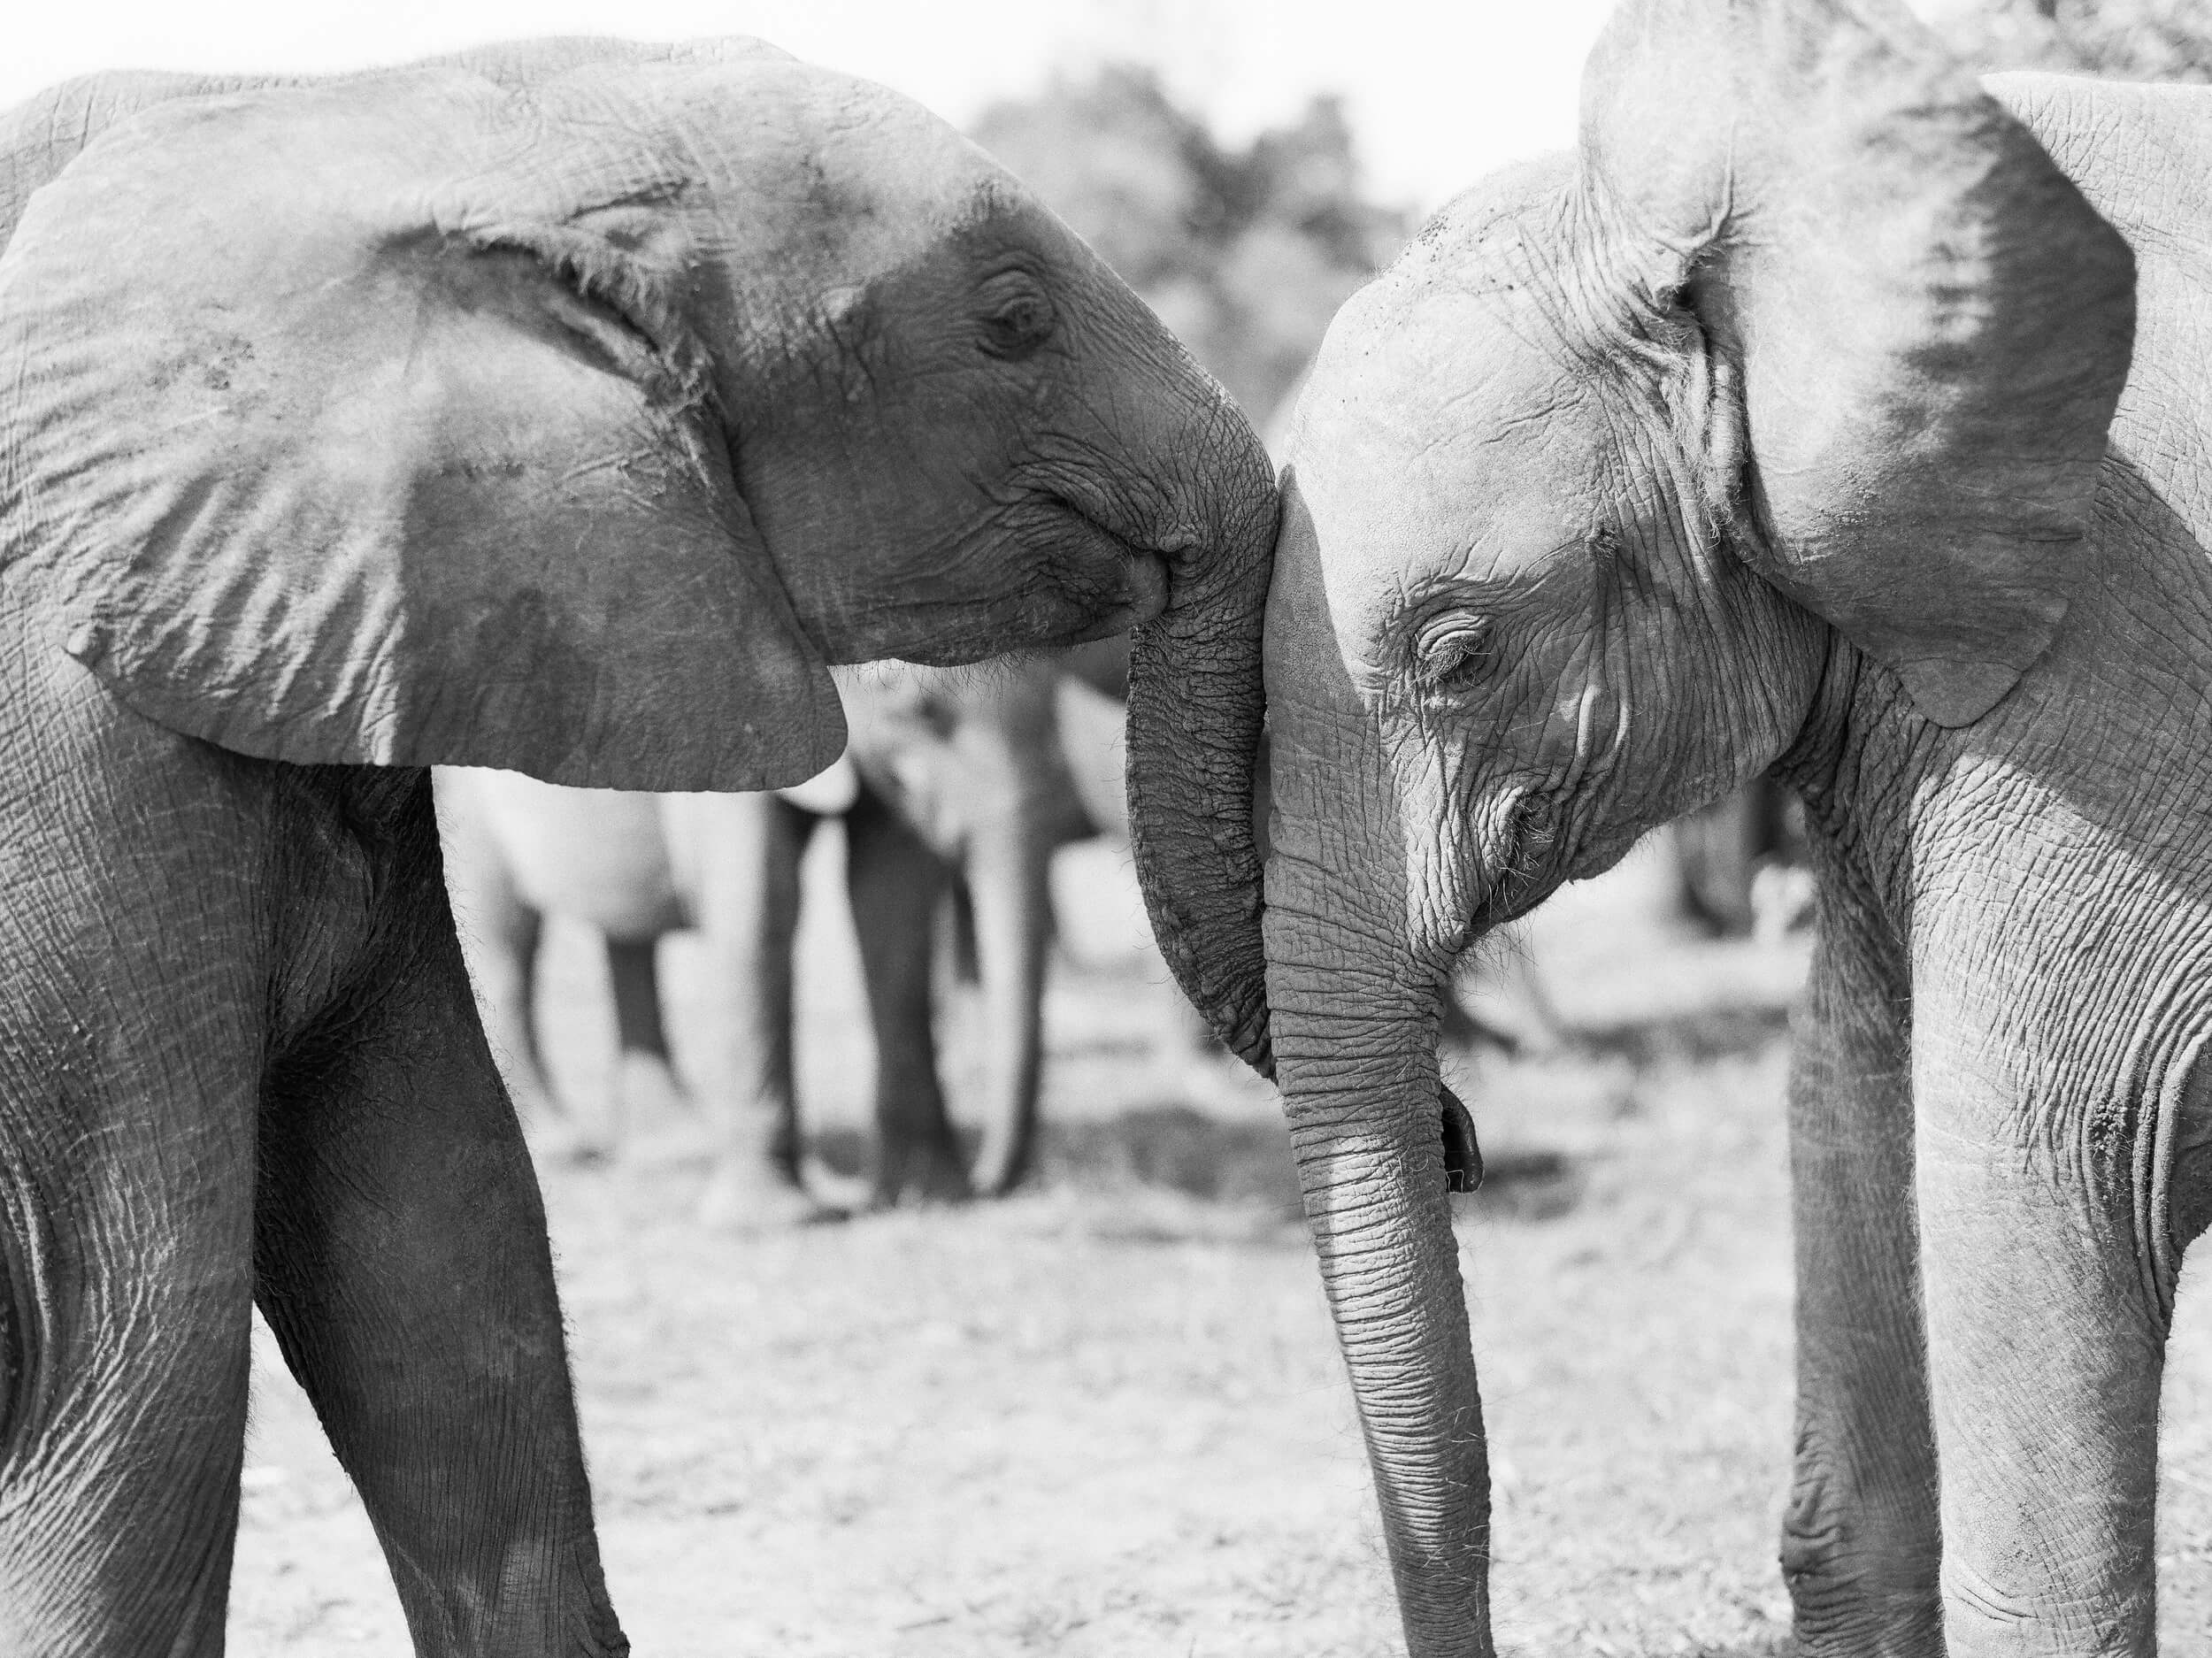 elephants cuddle each other